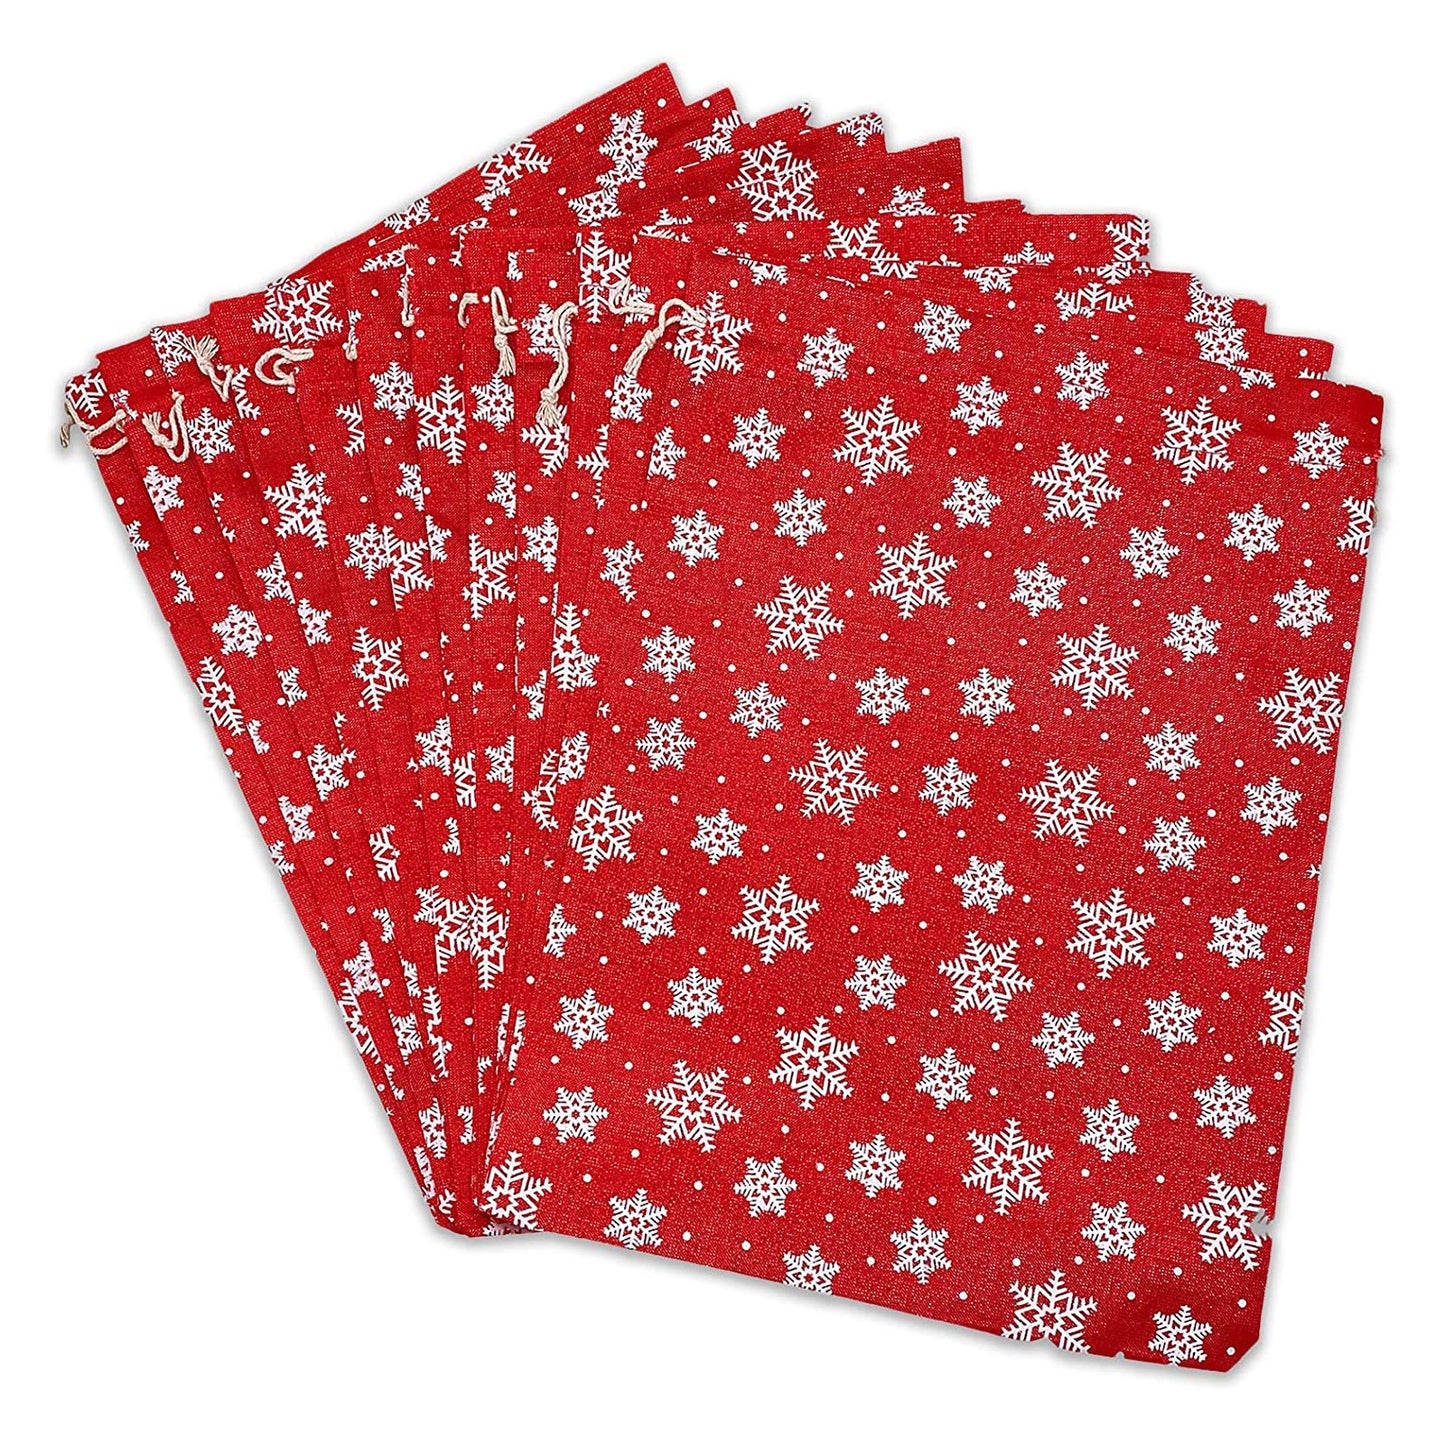 12" x 16" Jute Burlap Red Christmas White Snowflake Drawstring Gift Bags